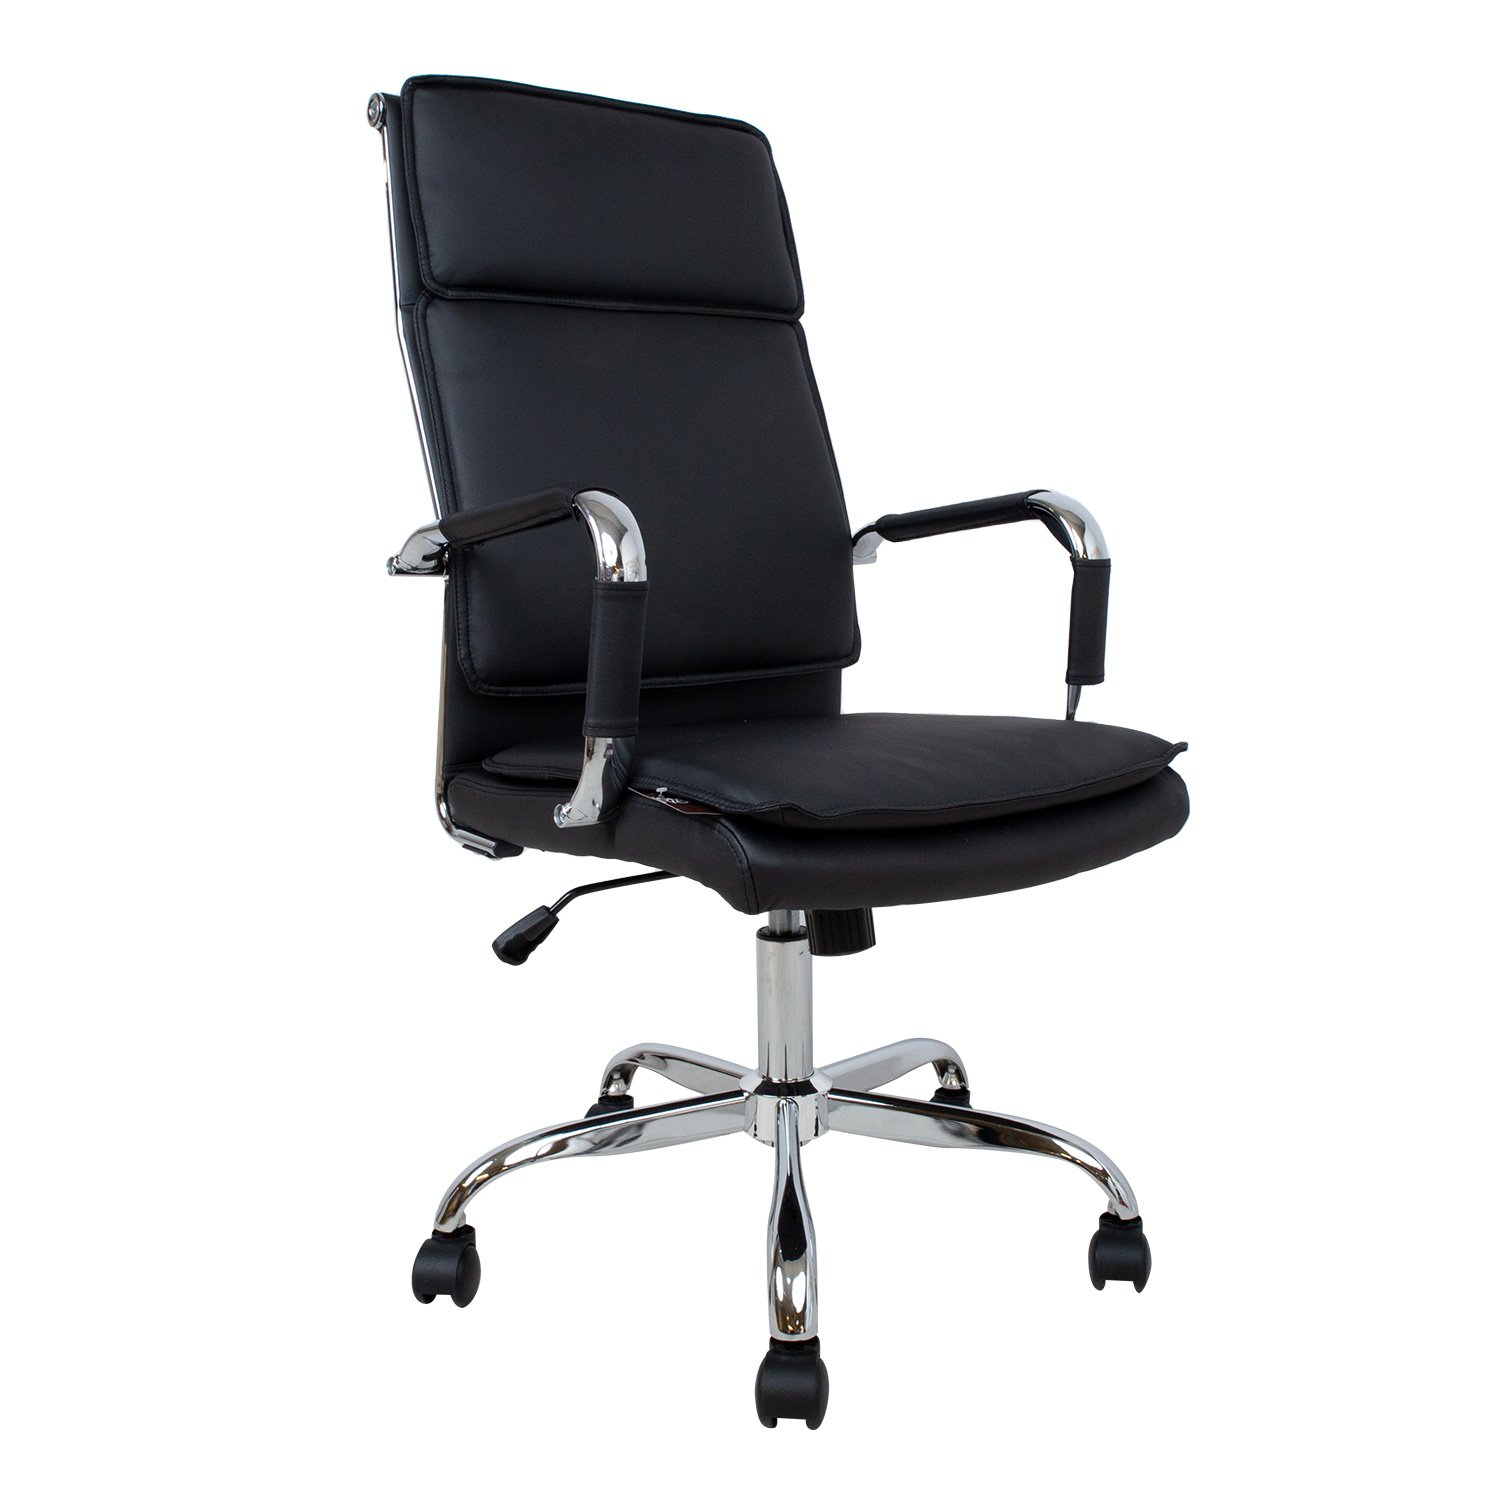 Biuro kėdė ULTRA, 54,5x60xH106,5-116,5 cm, juoda